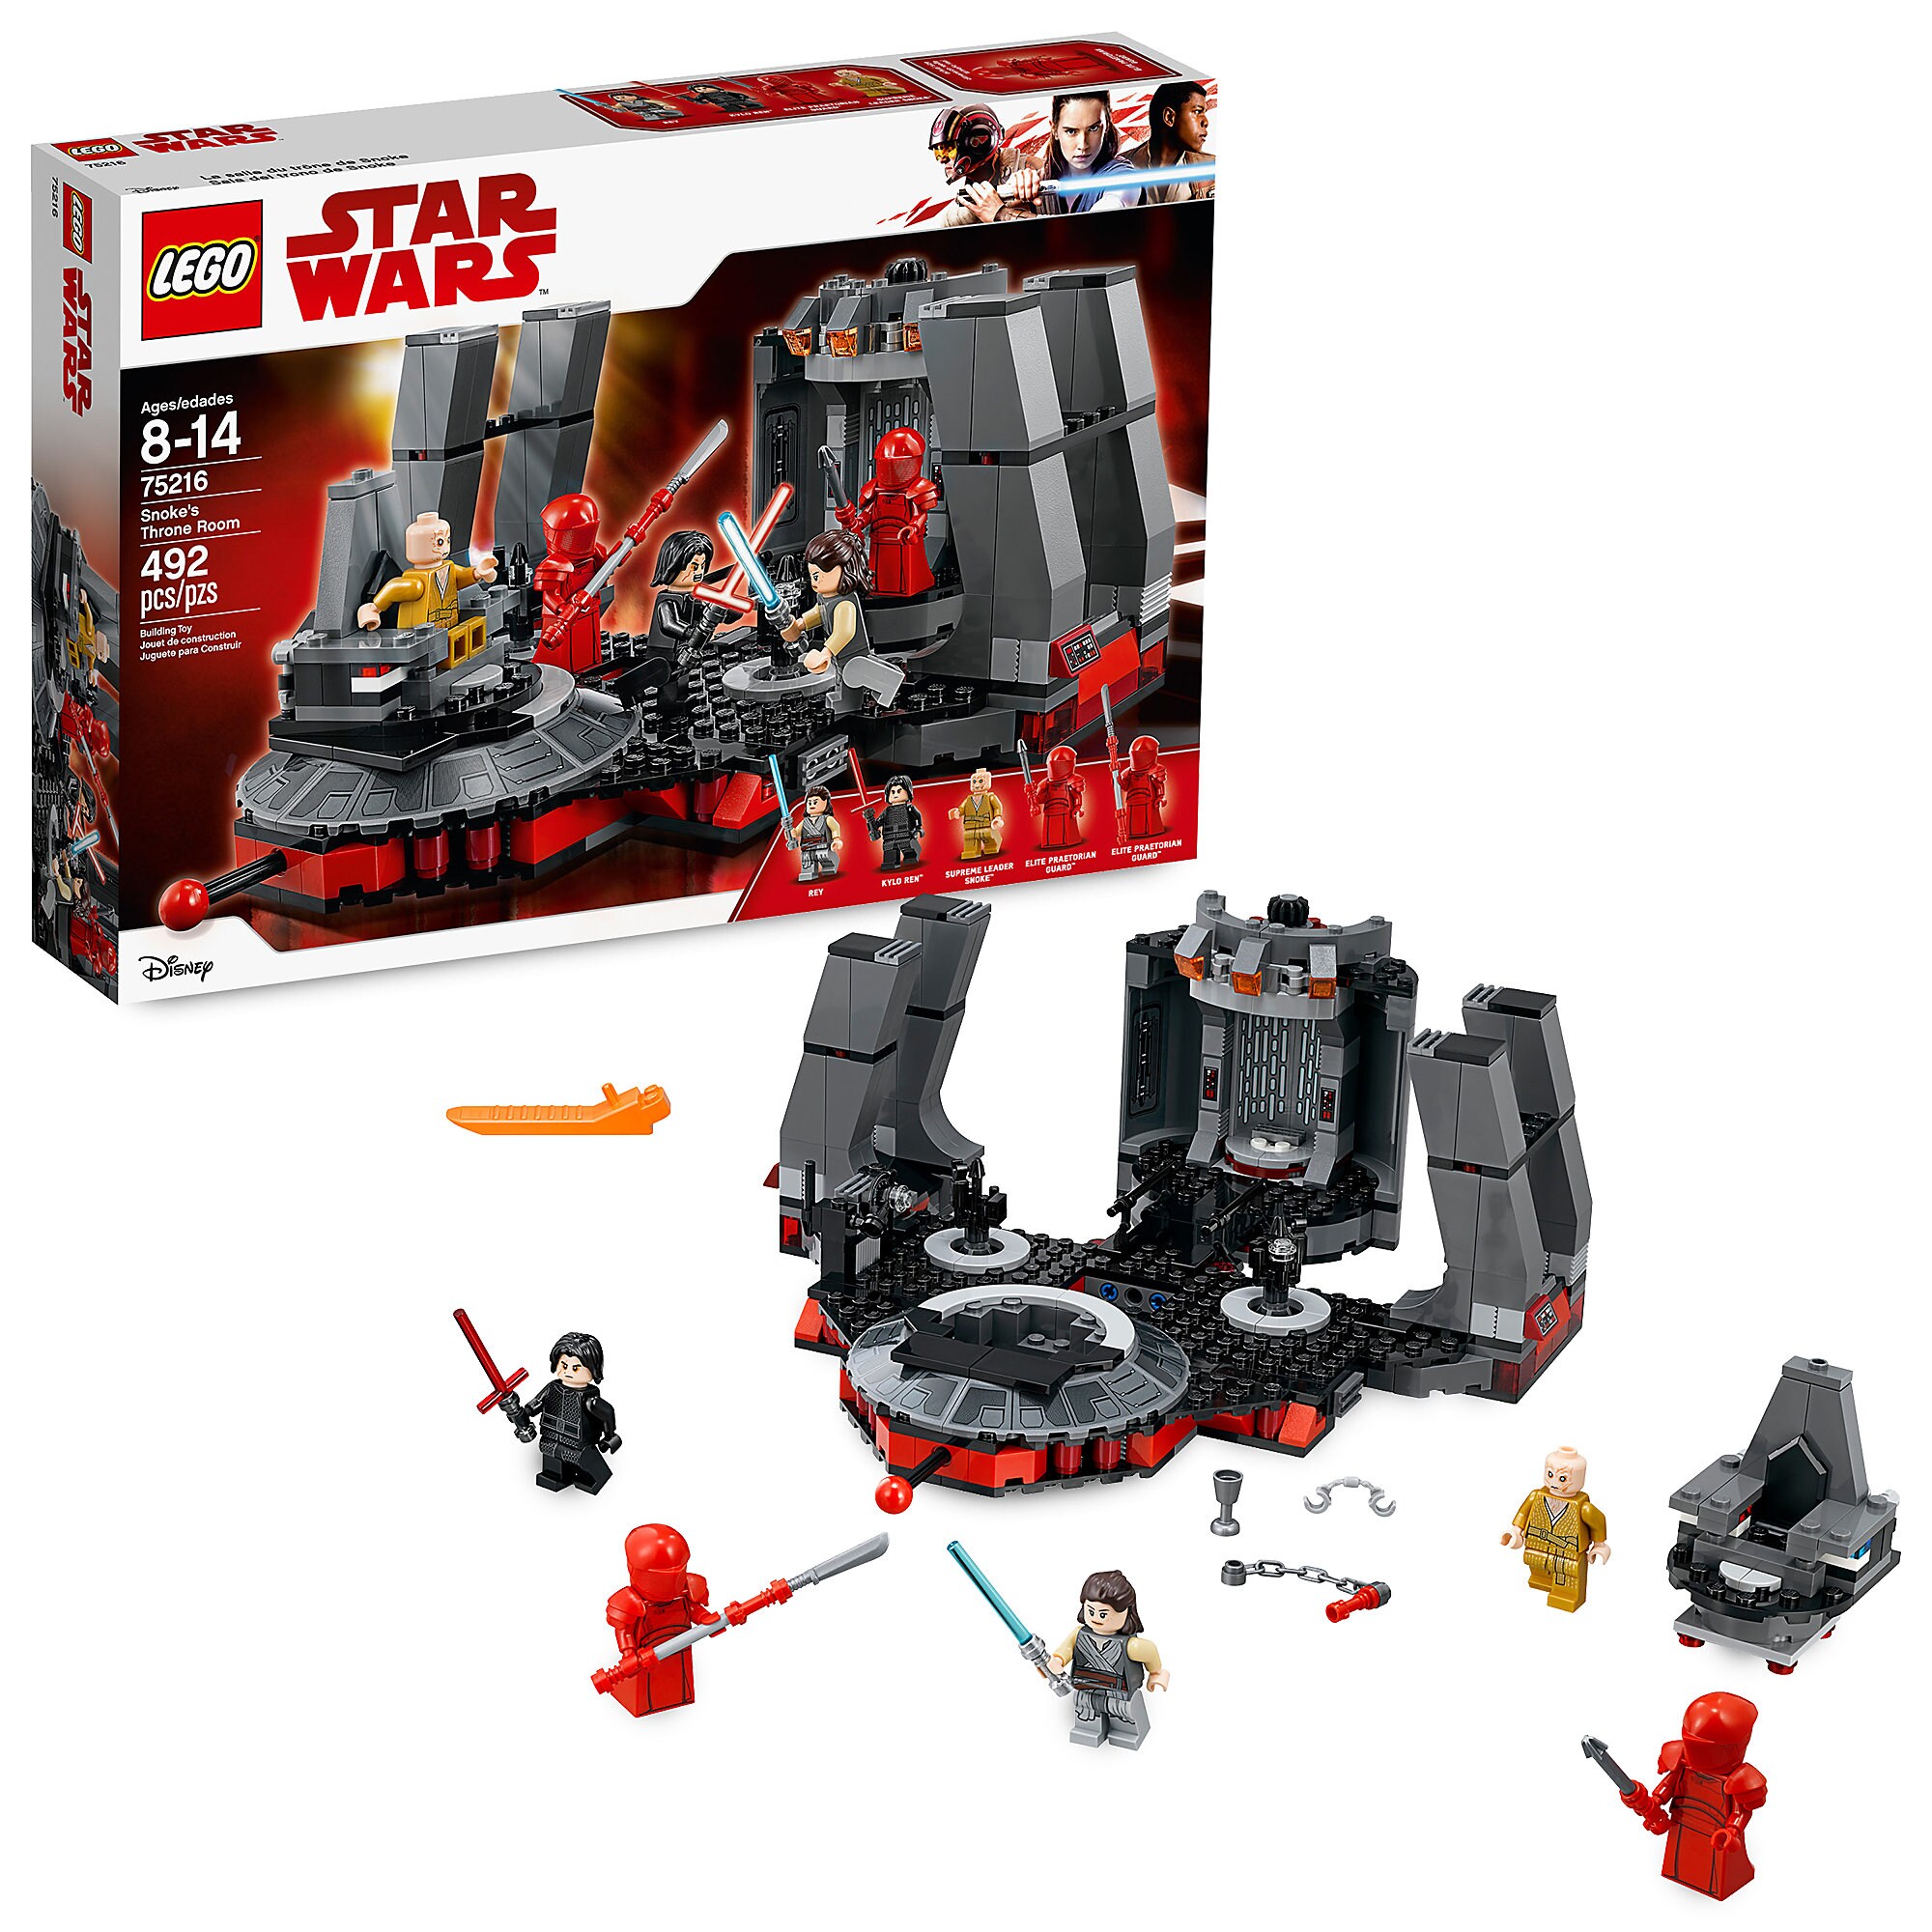 Snoke's Throne Room Playset by LEGO - Star Wars: The Last Jedi